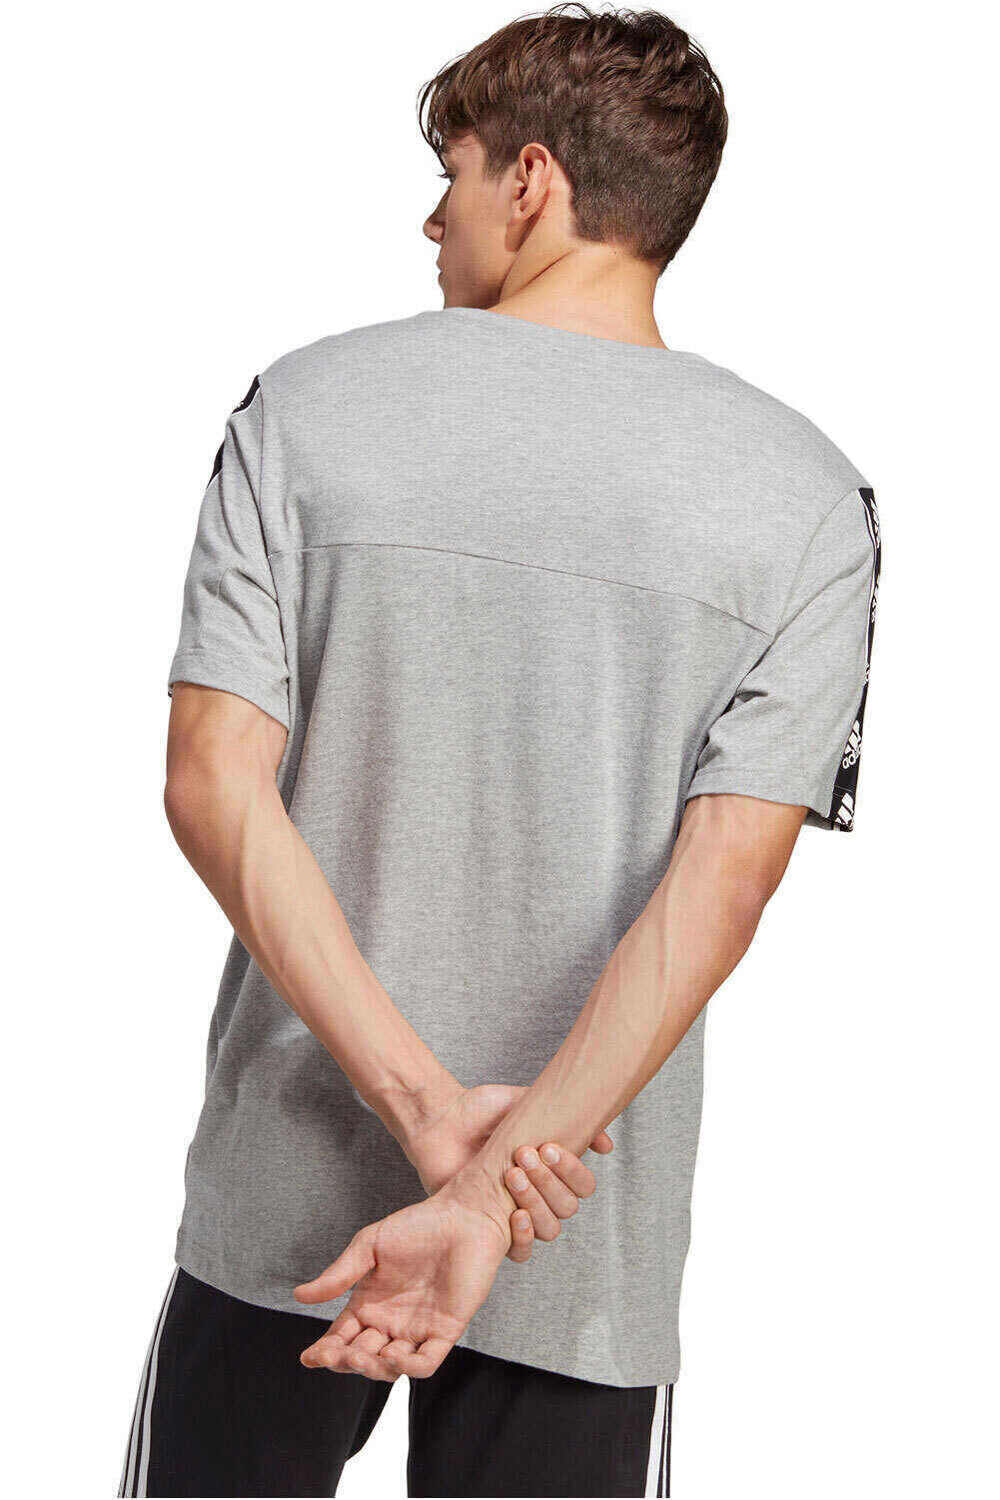 adidas camiseta manga corta hombre Brandlove vista trasera